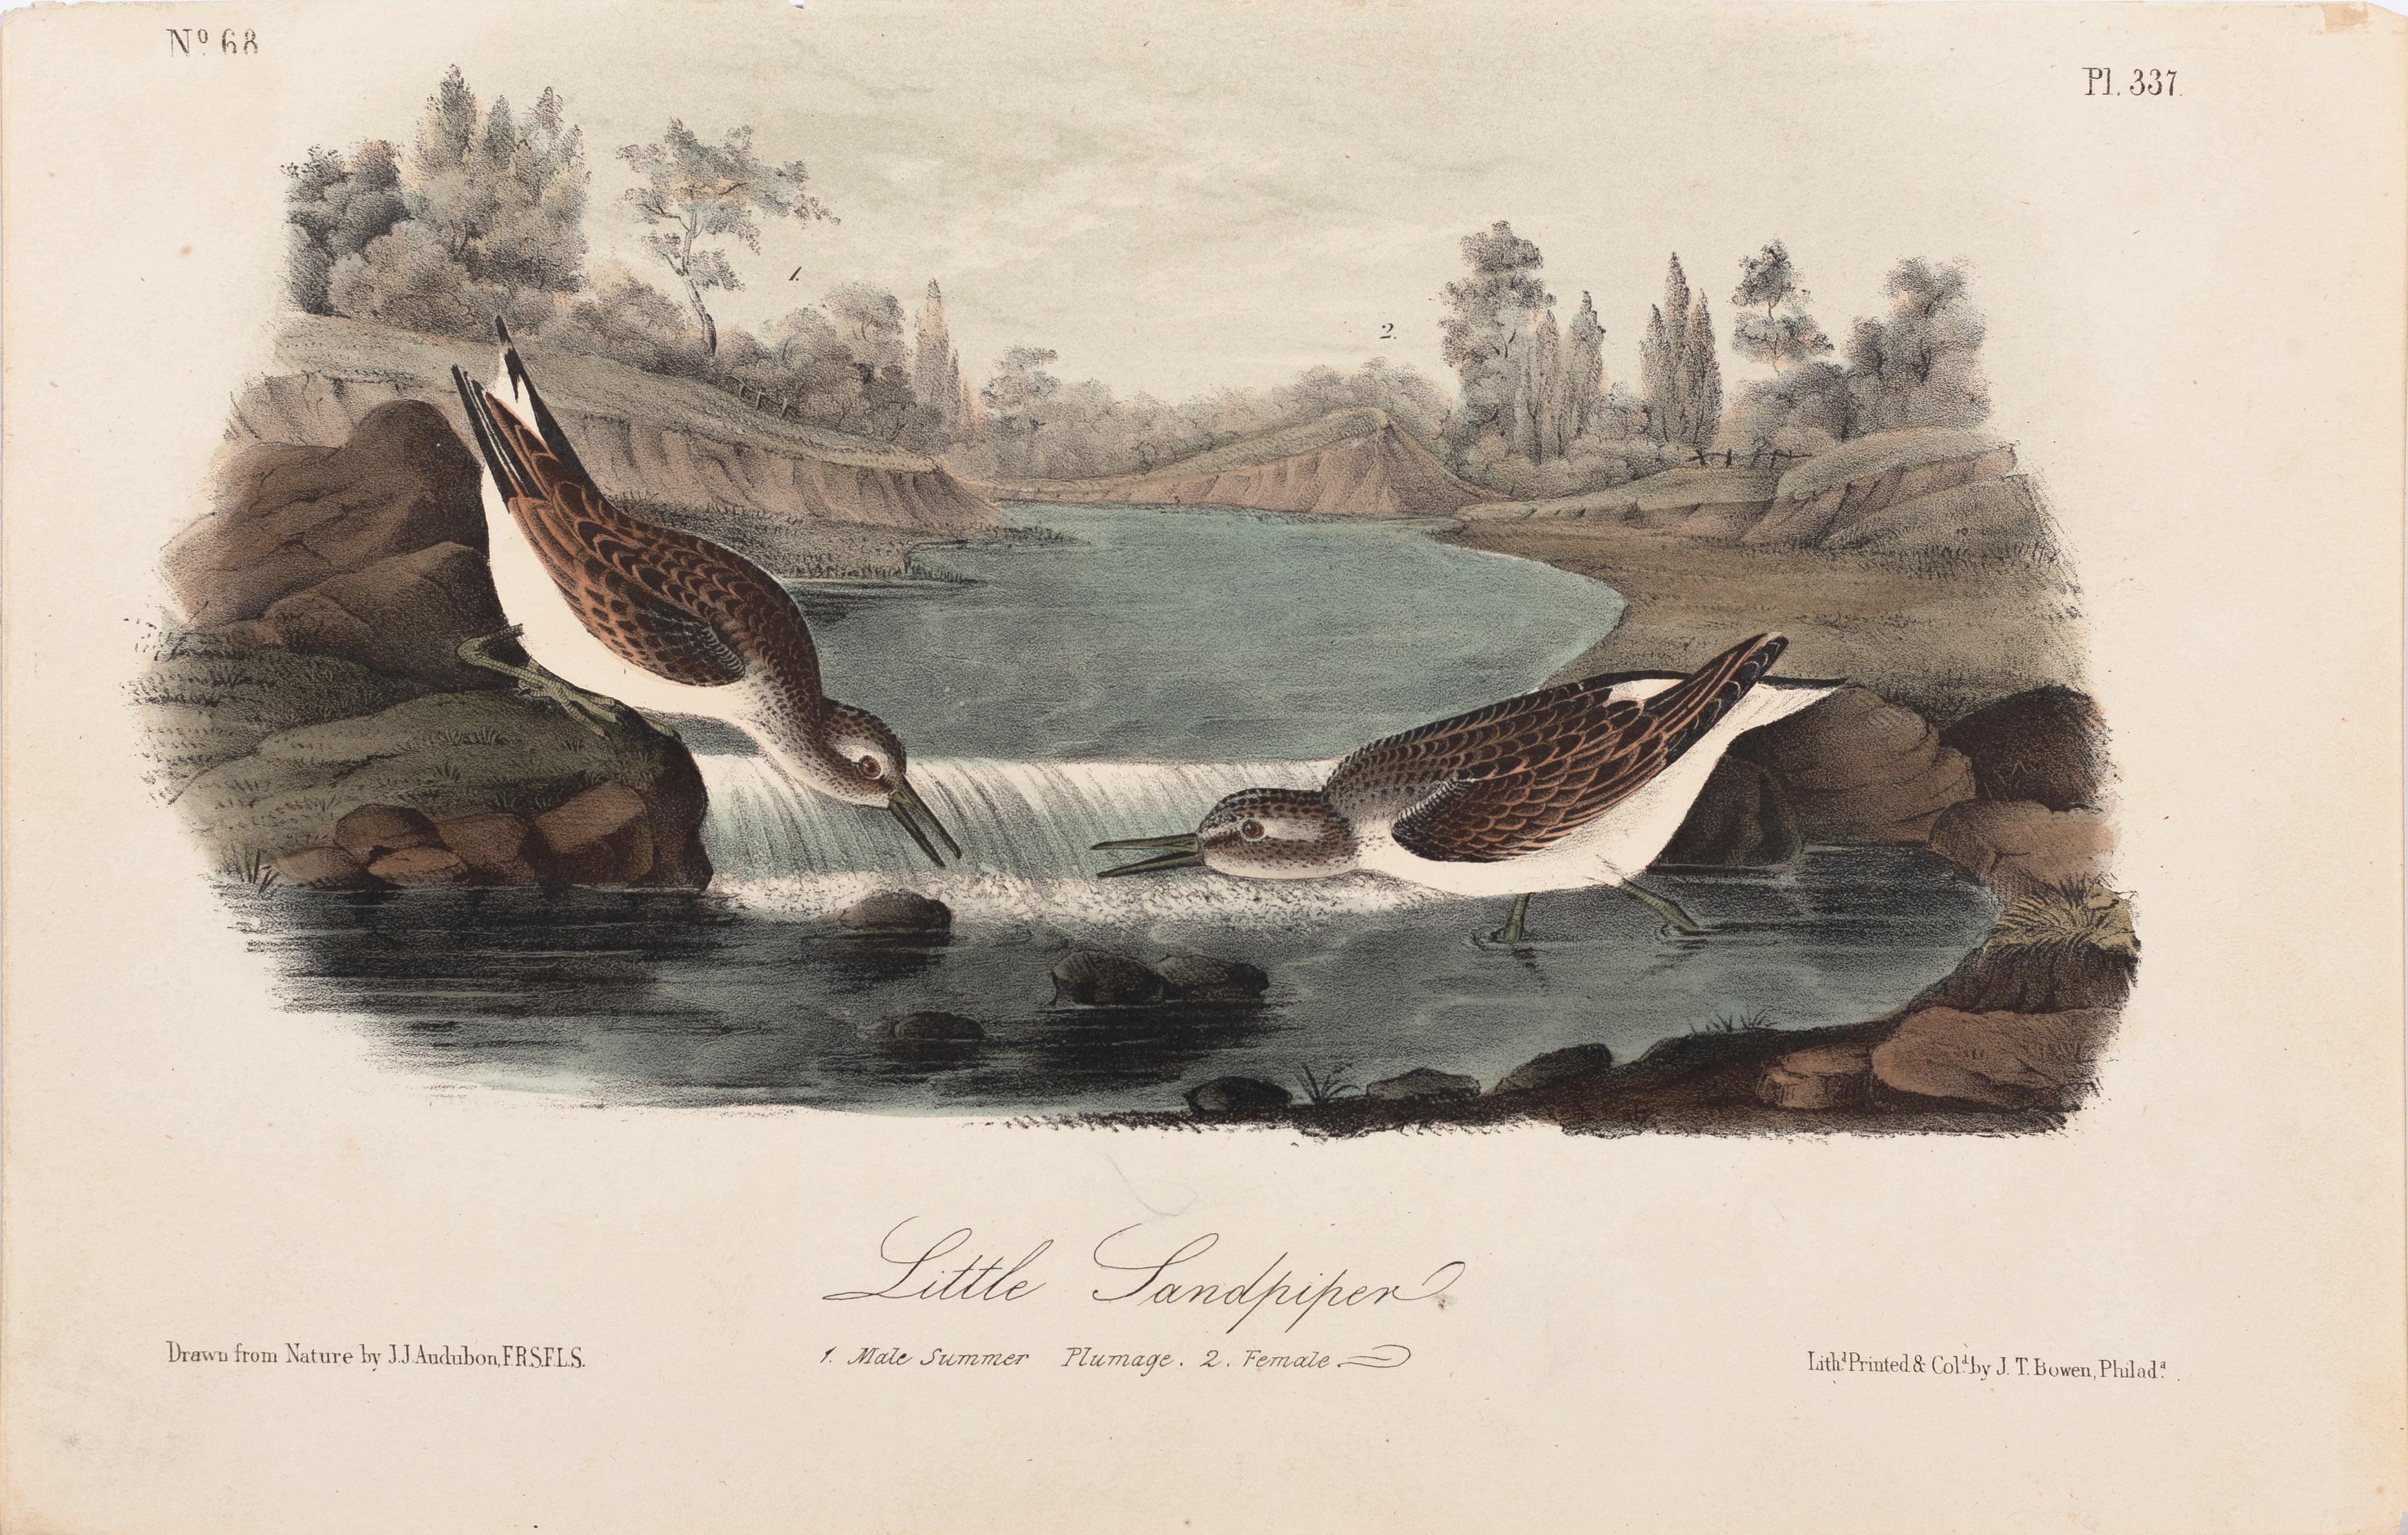 John James Audubon Animal Print - The Birds of America "Little Sandpiper" Plate 337